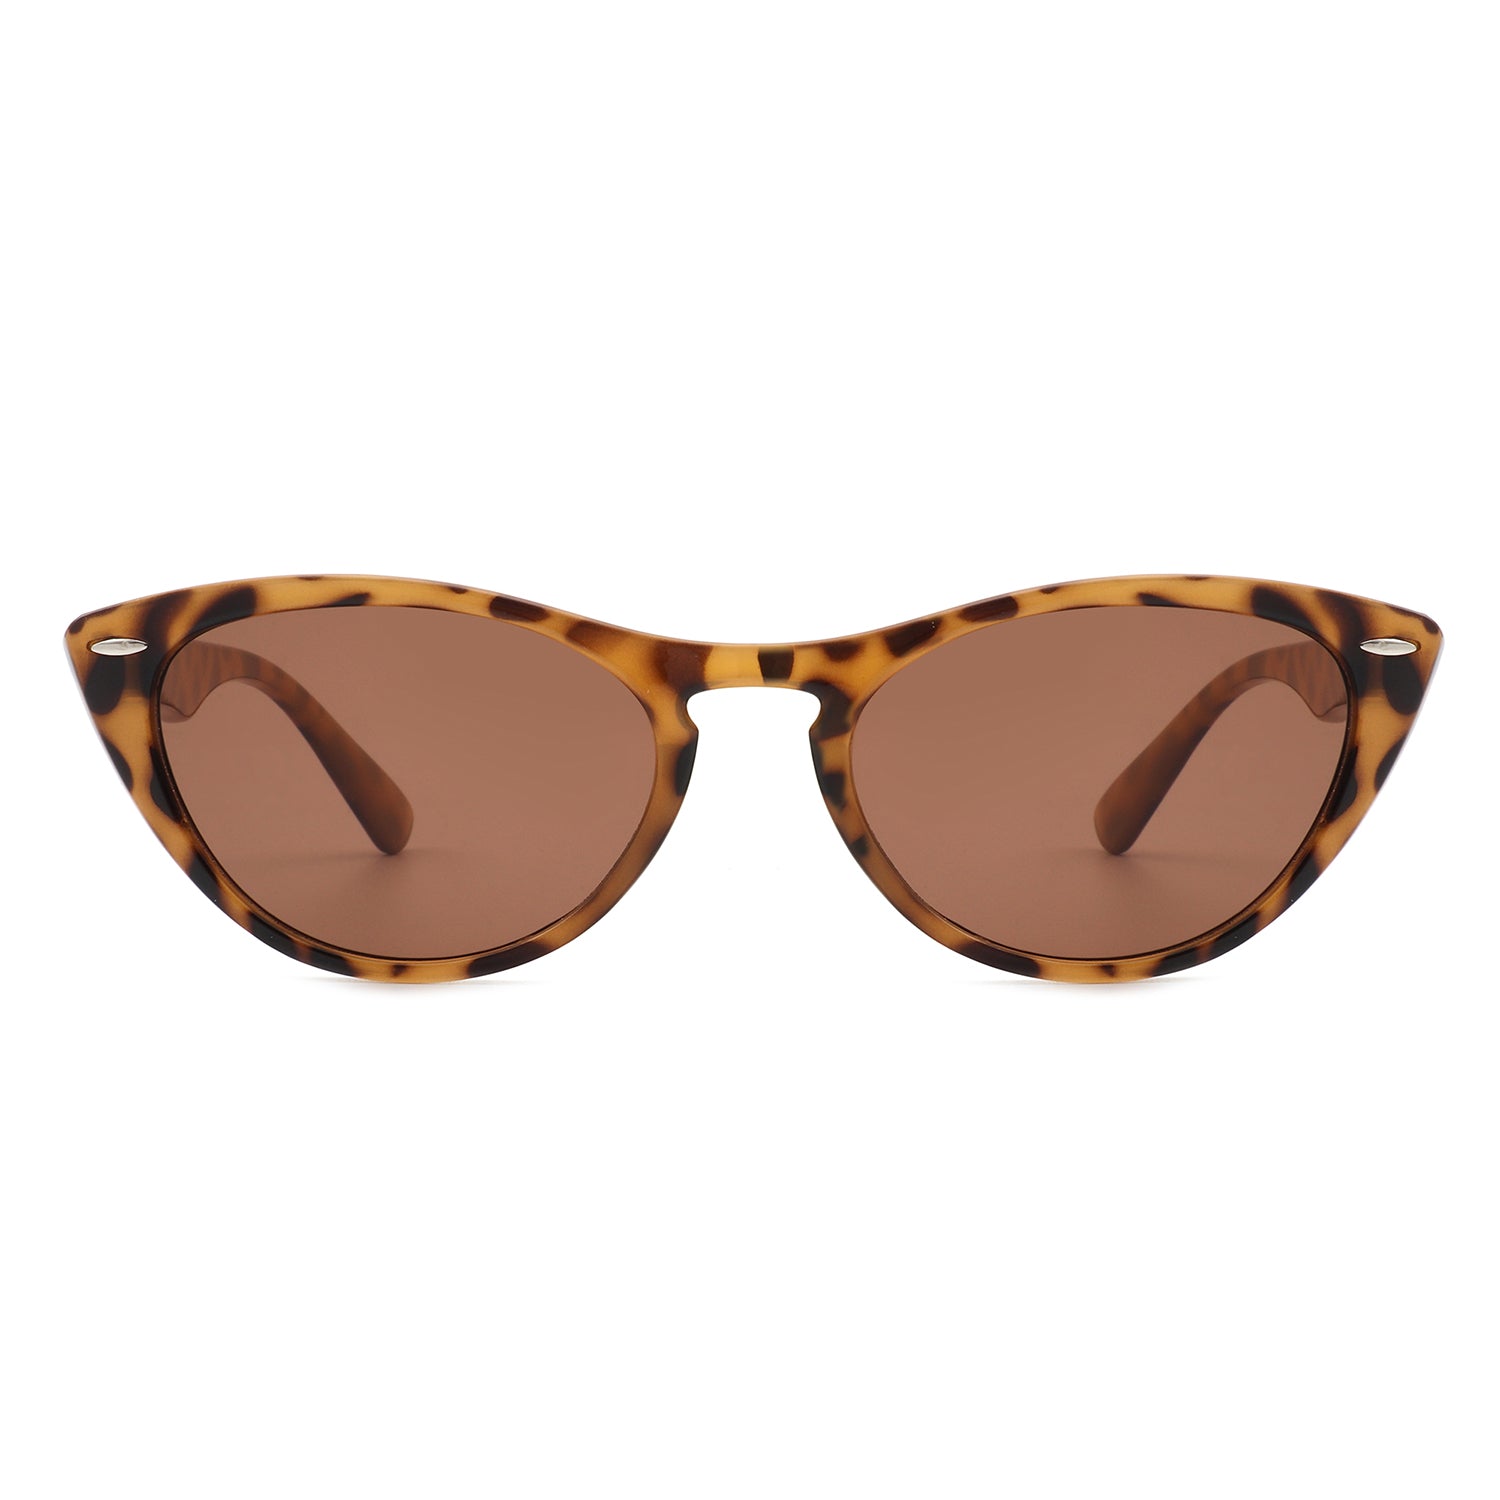 HS1061 - Classic Women Round Retro Fashion Cat Eye Sunglasses